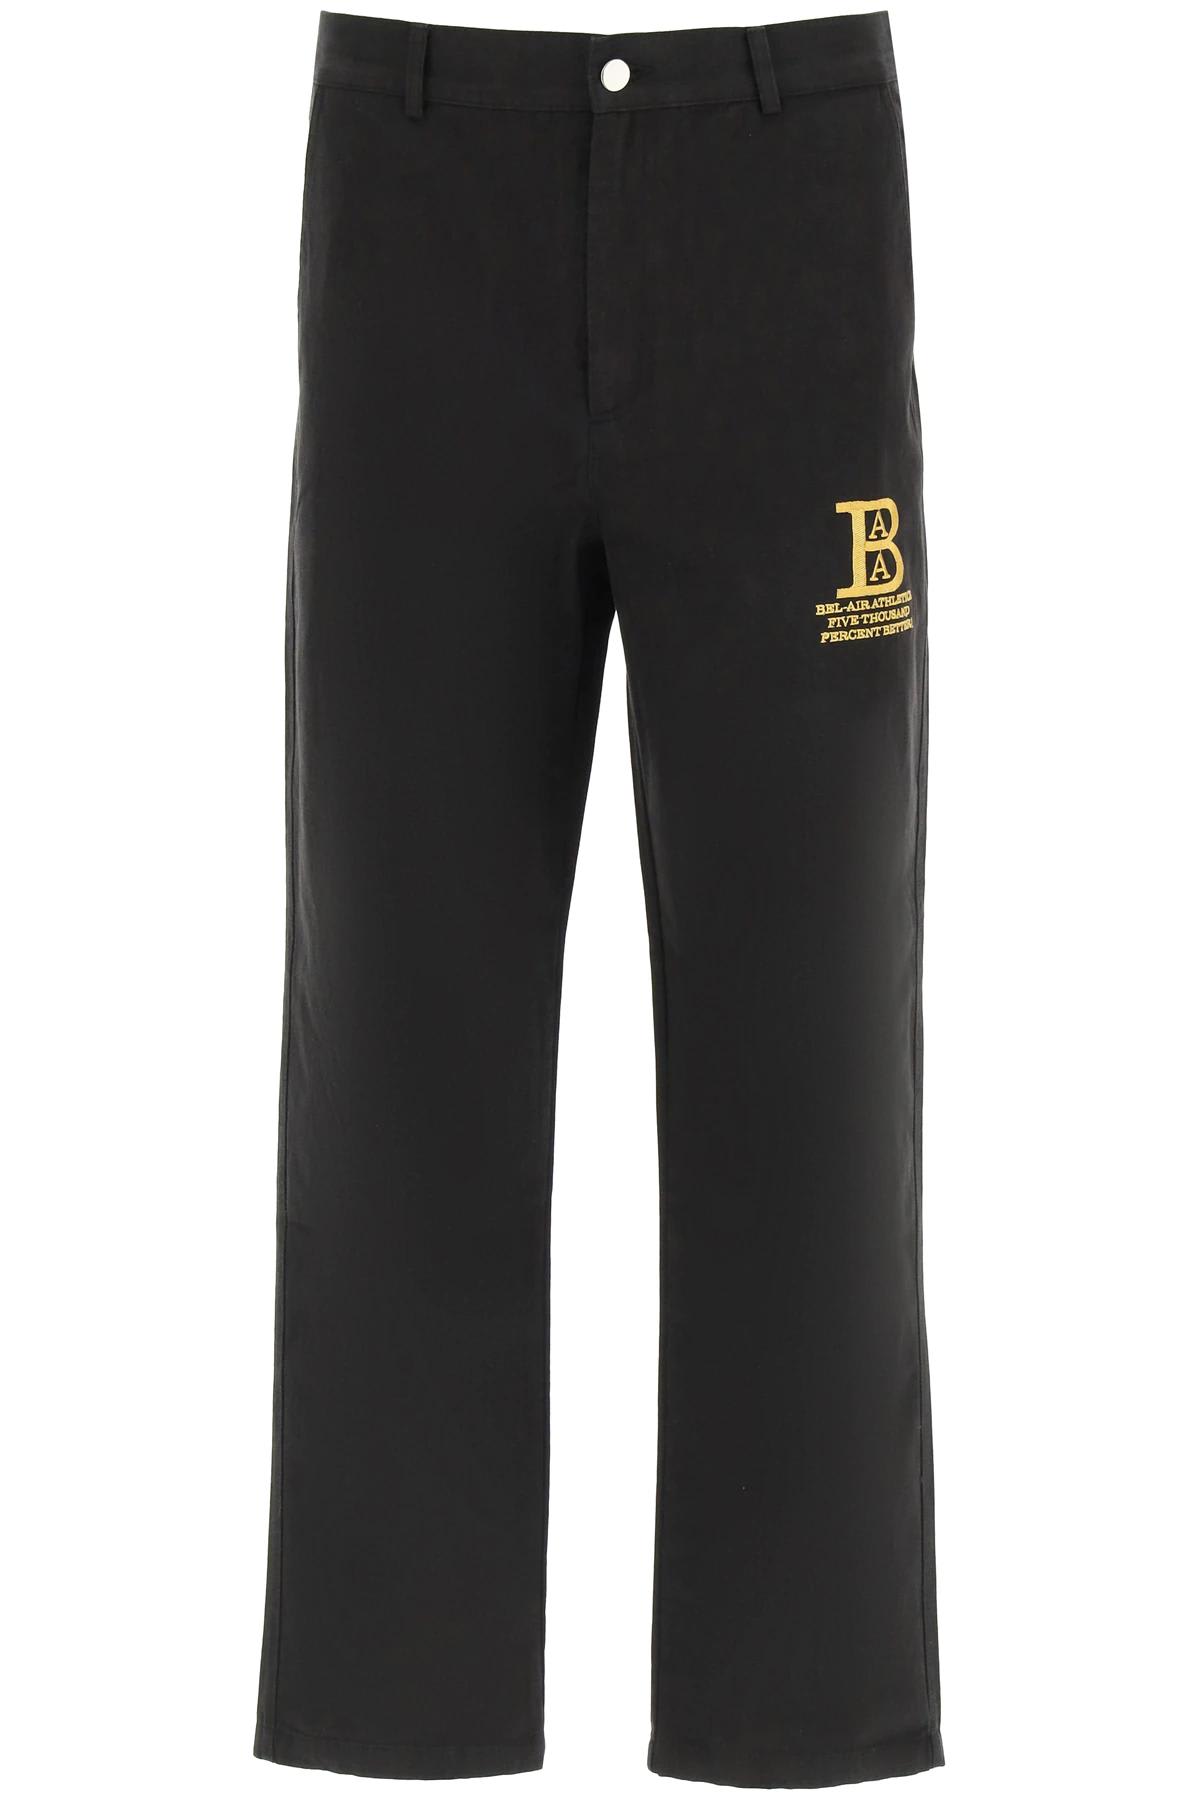 Bel-Air Athletics Cotton Trousers